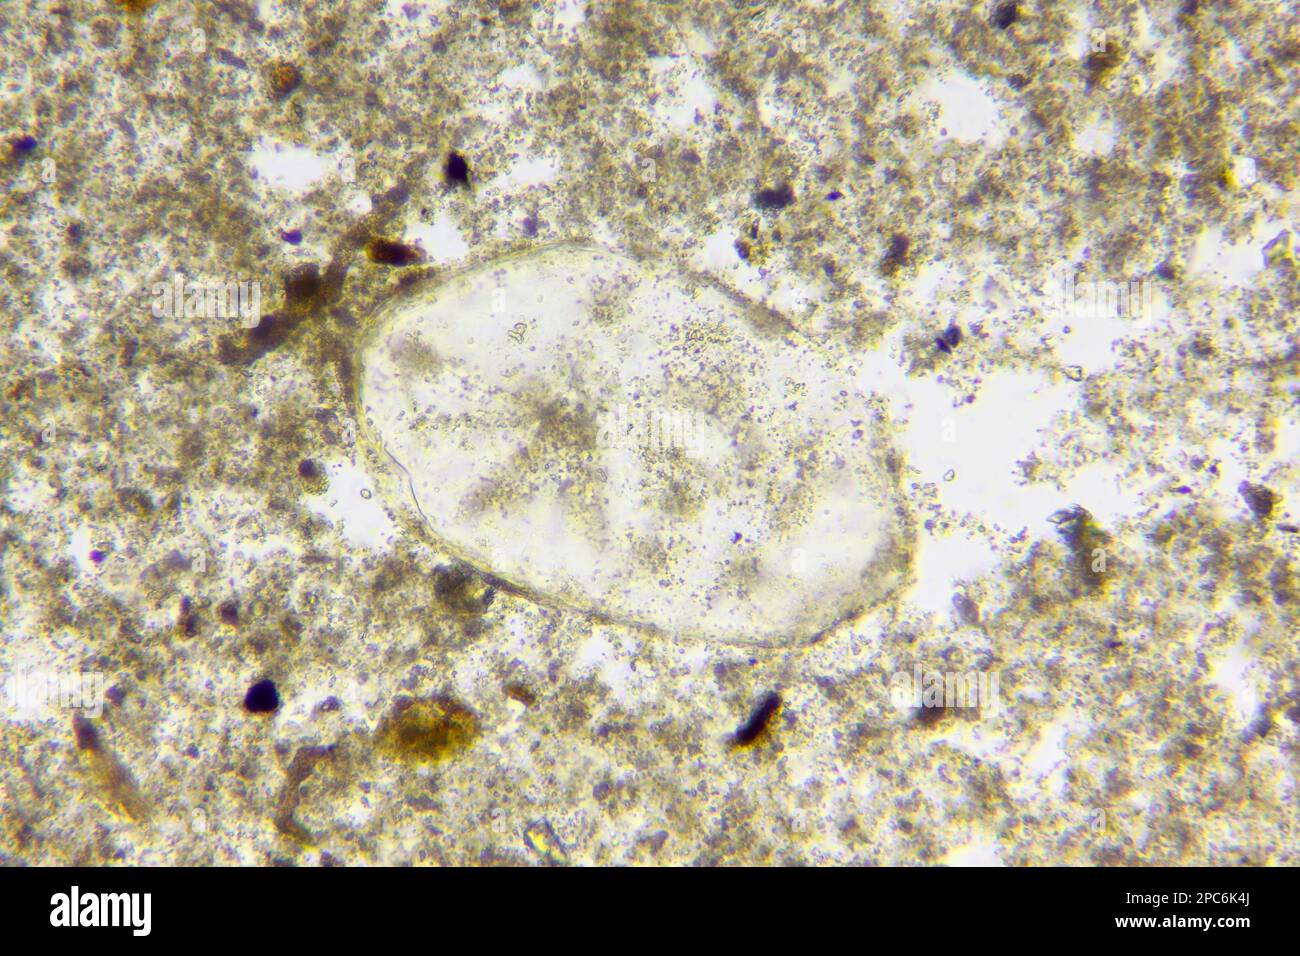 Microscopic view of Foraminifera test (shell) extracted from silurian limestone. Brightfield illumination. Stock Photo